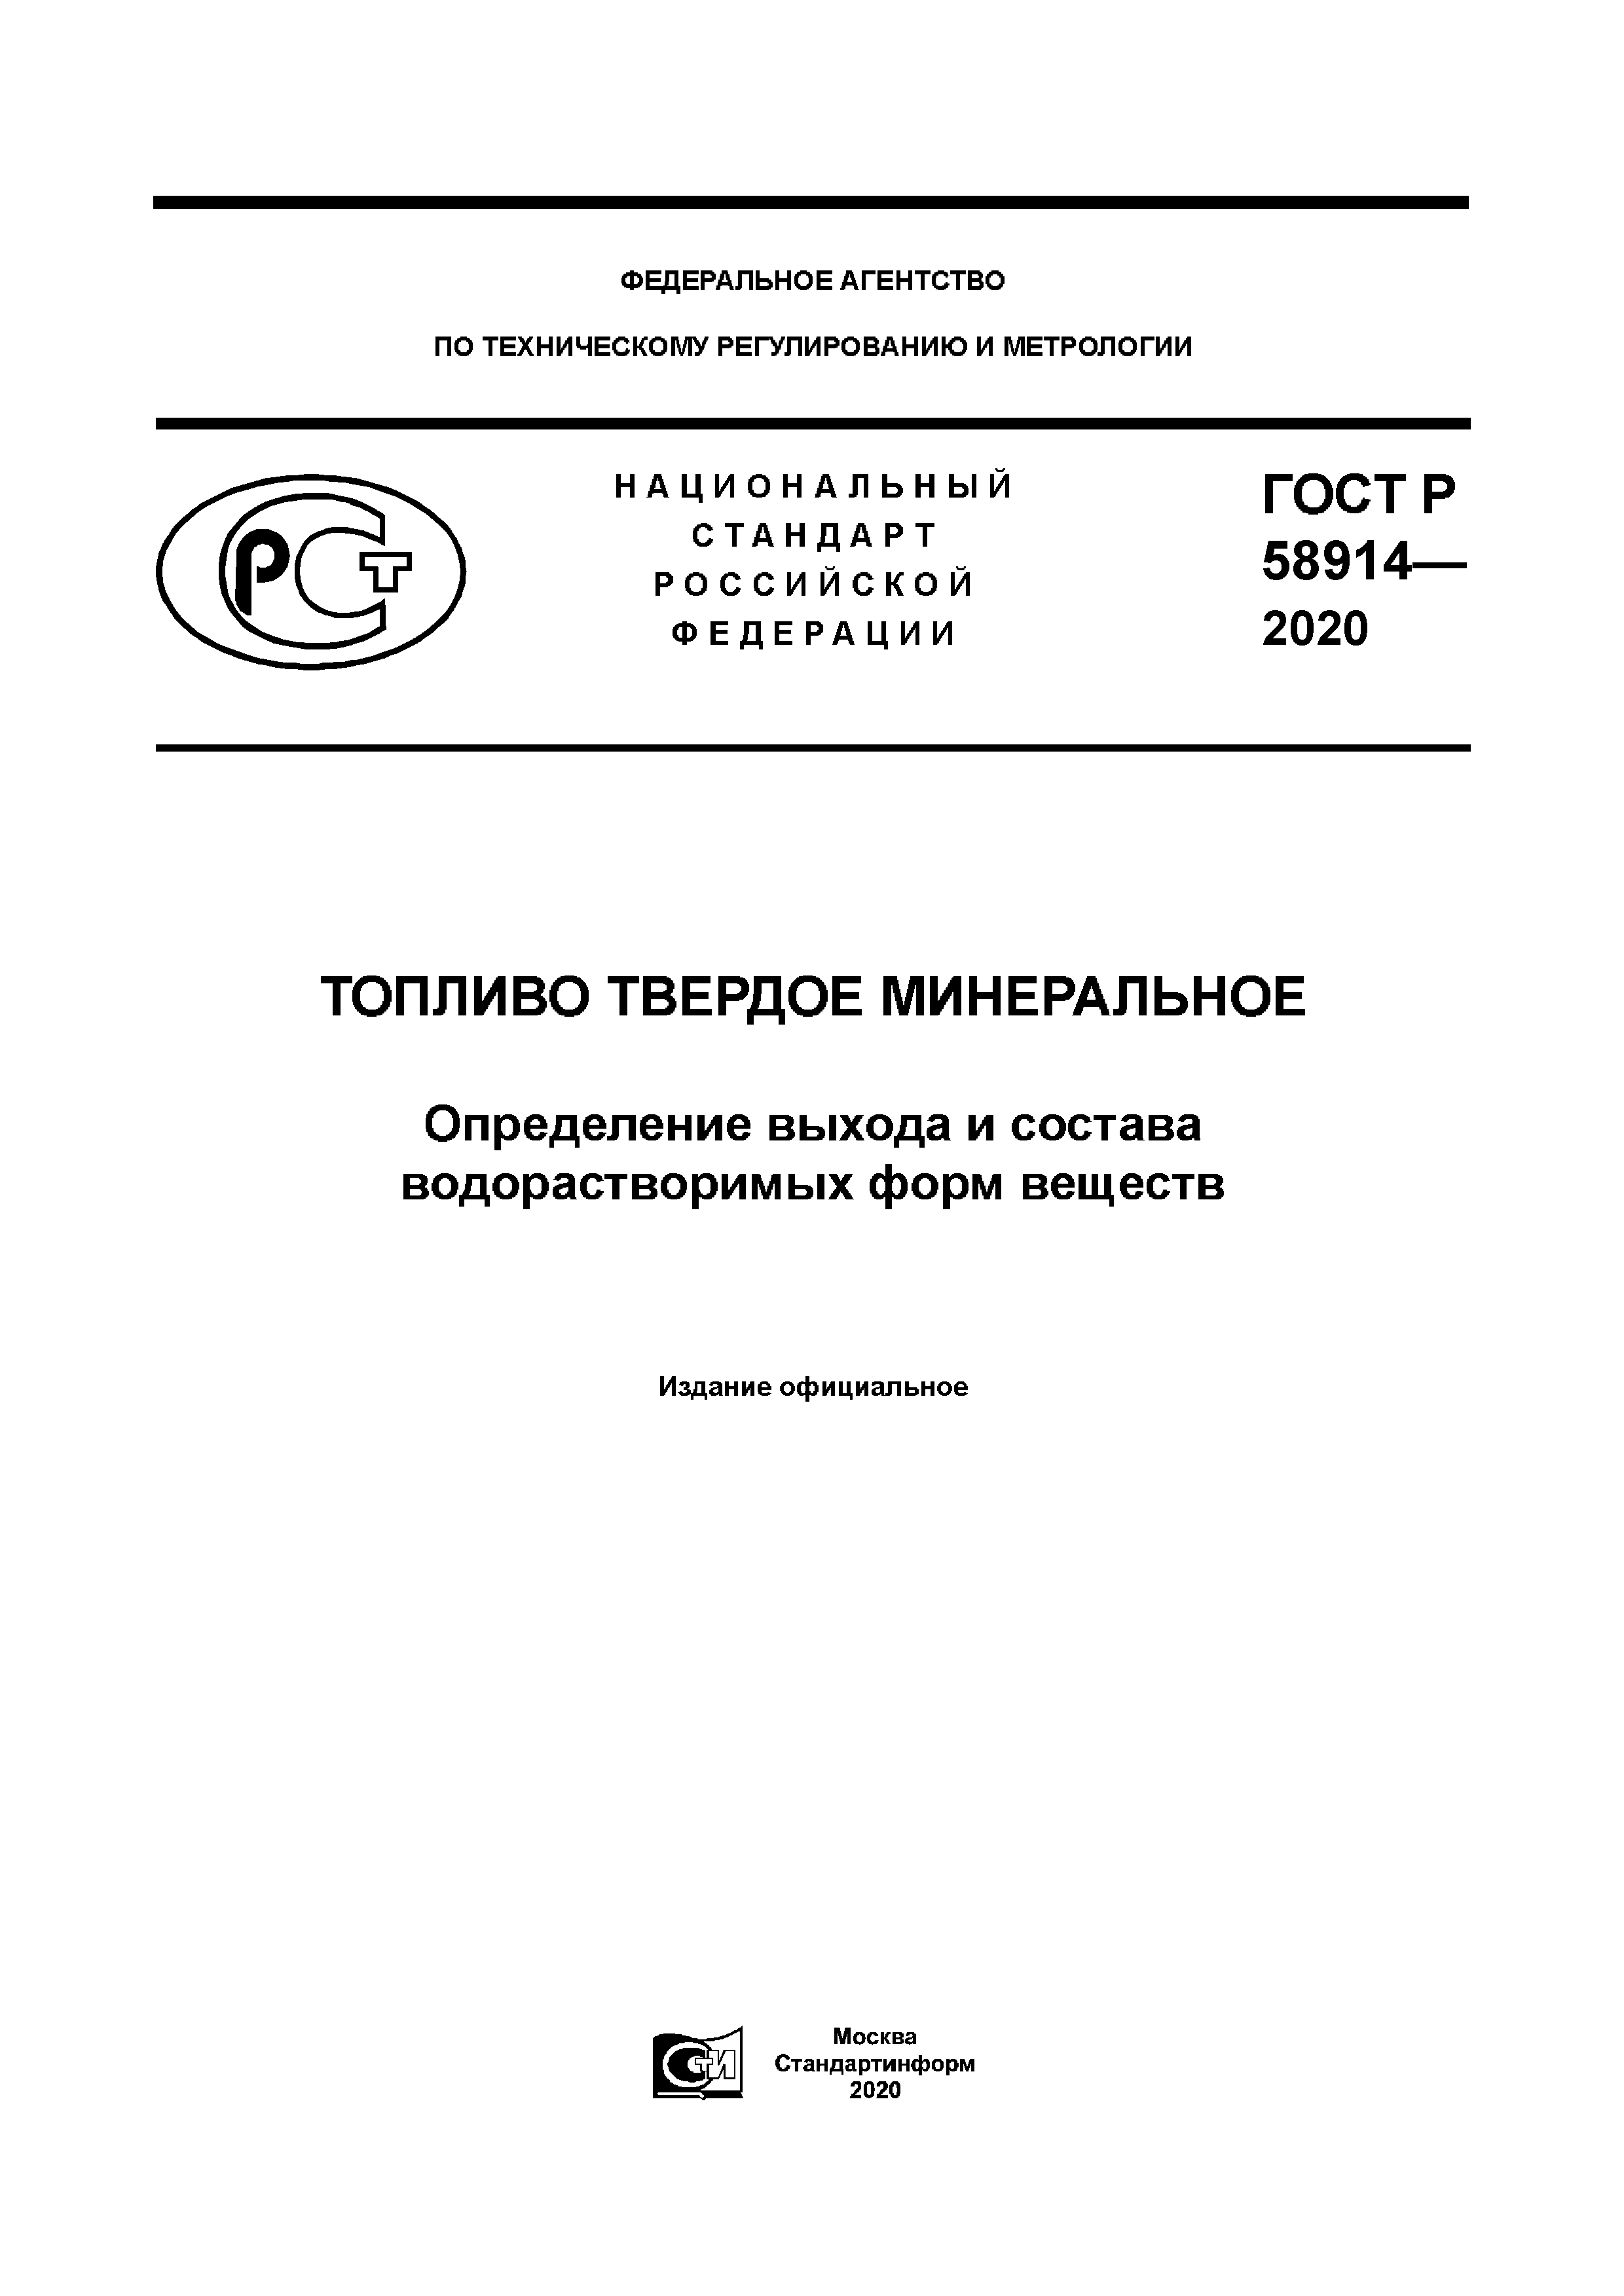 ГОСТ Р 58914-2020